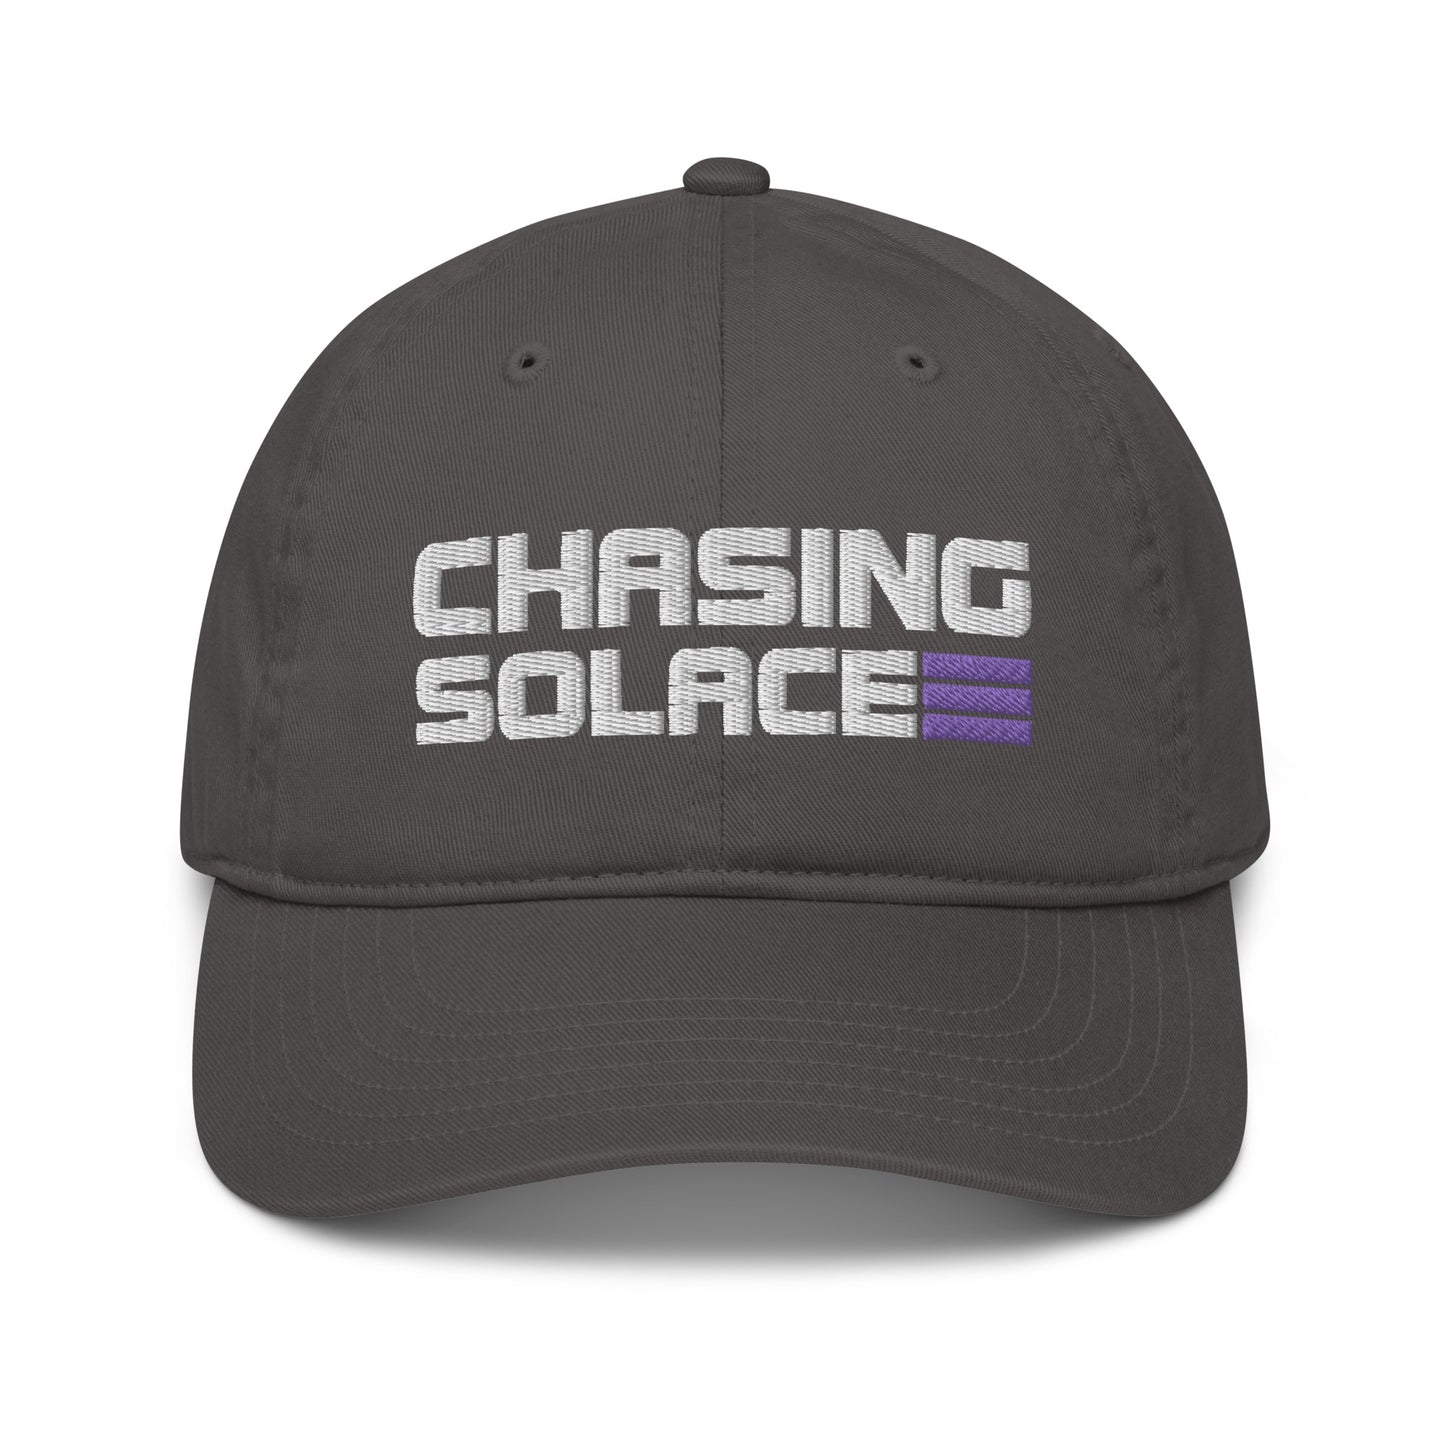 Chasing Solace (organic peaked cap)